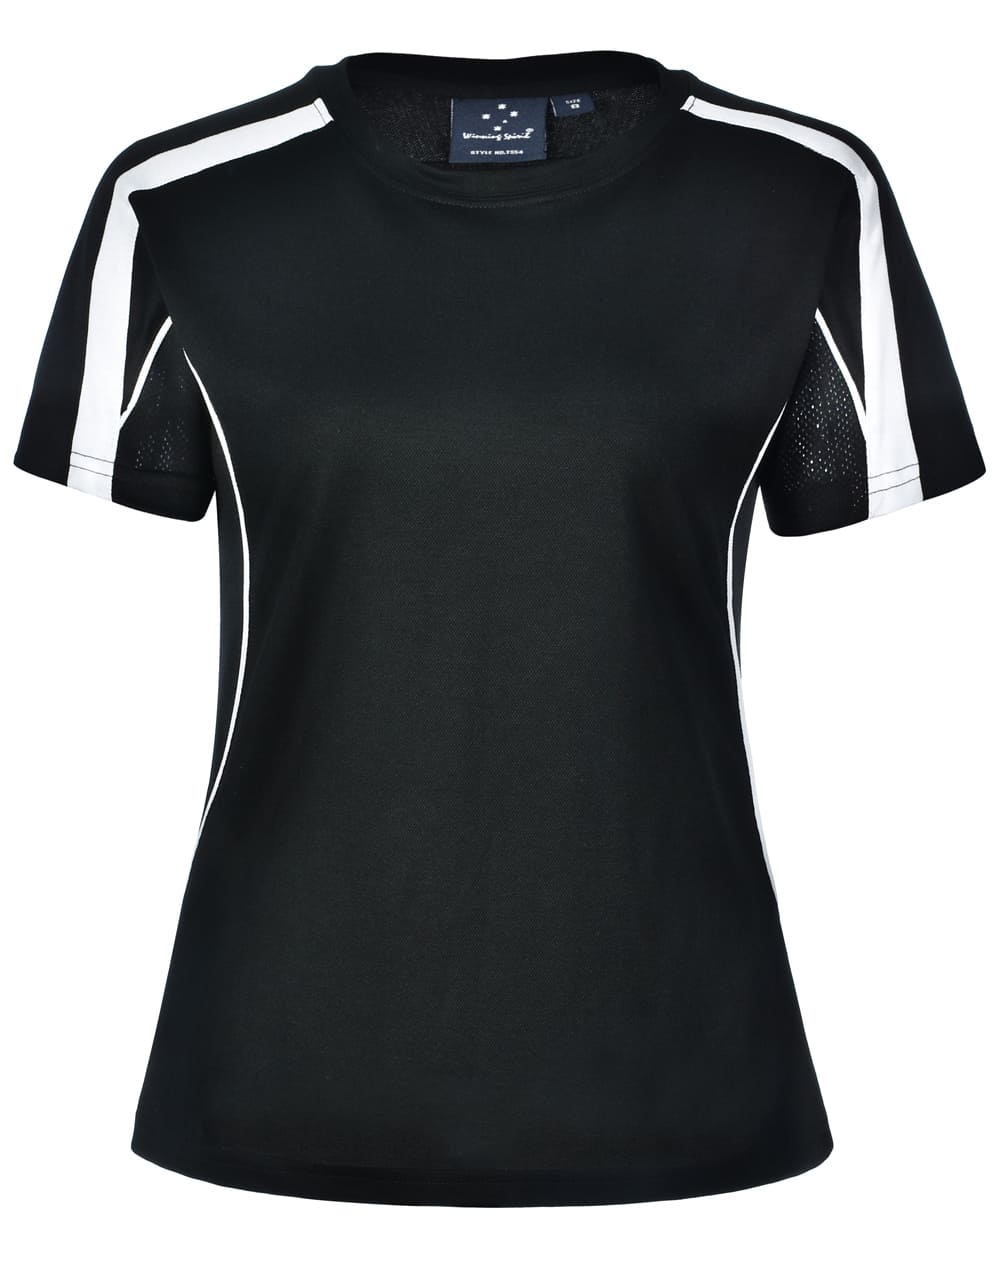 Custom (Navy White) Legend Ladies Short Sleeve Tee Shirts Online in Perth